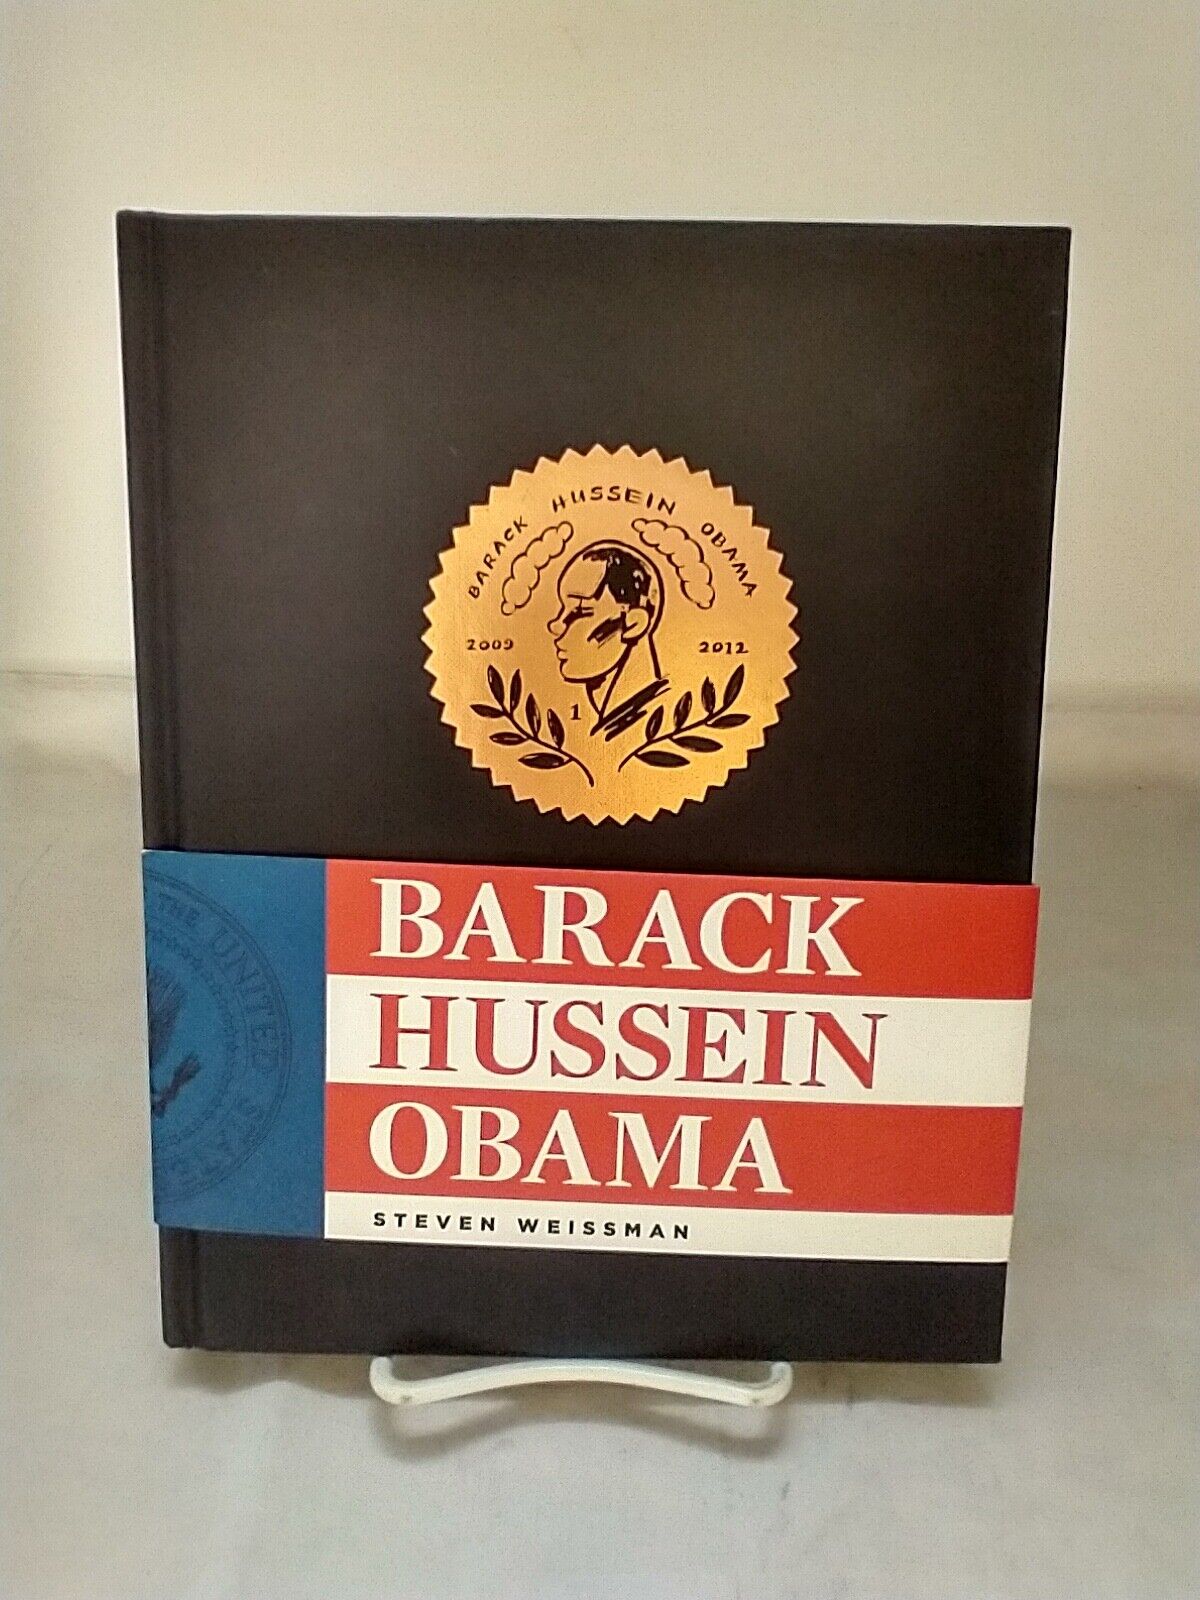 Barack Hussein Obama by Steven Weissman Hardcover New